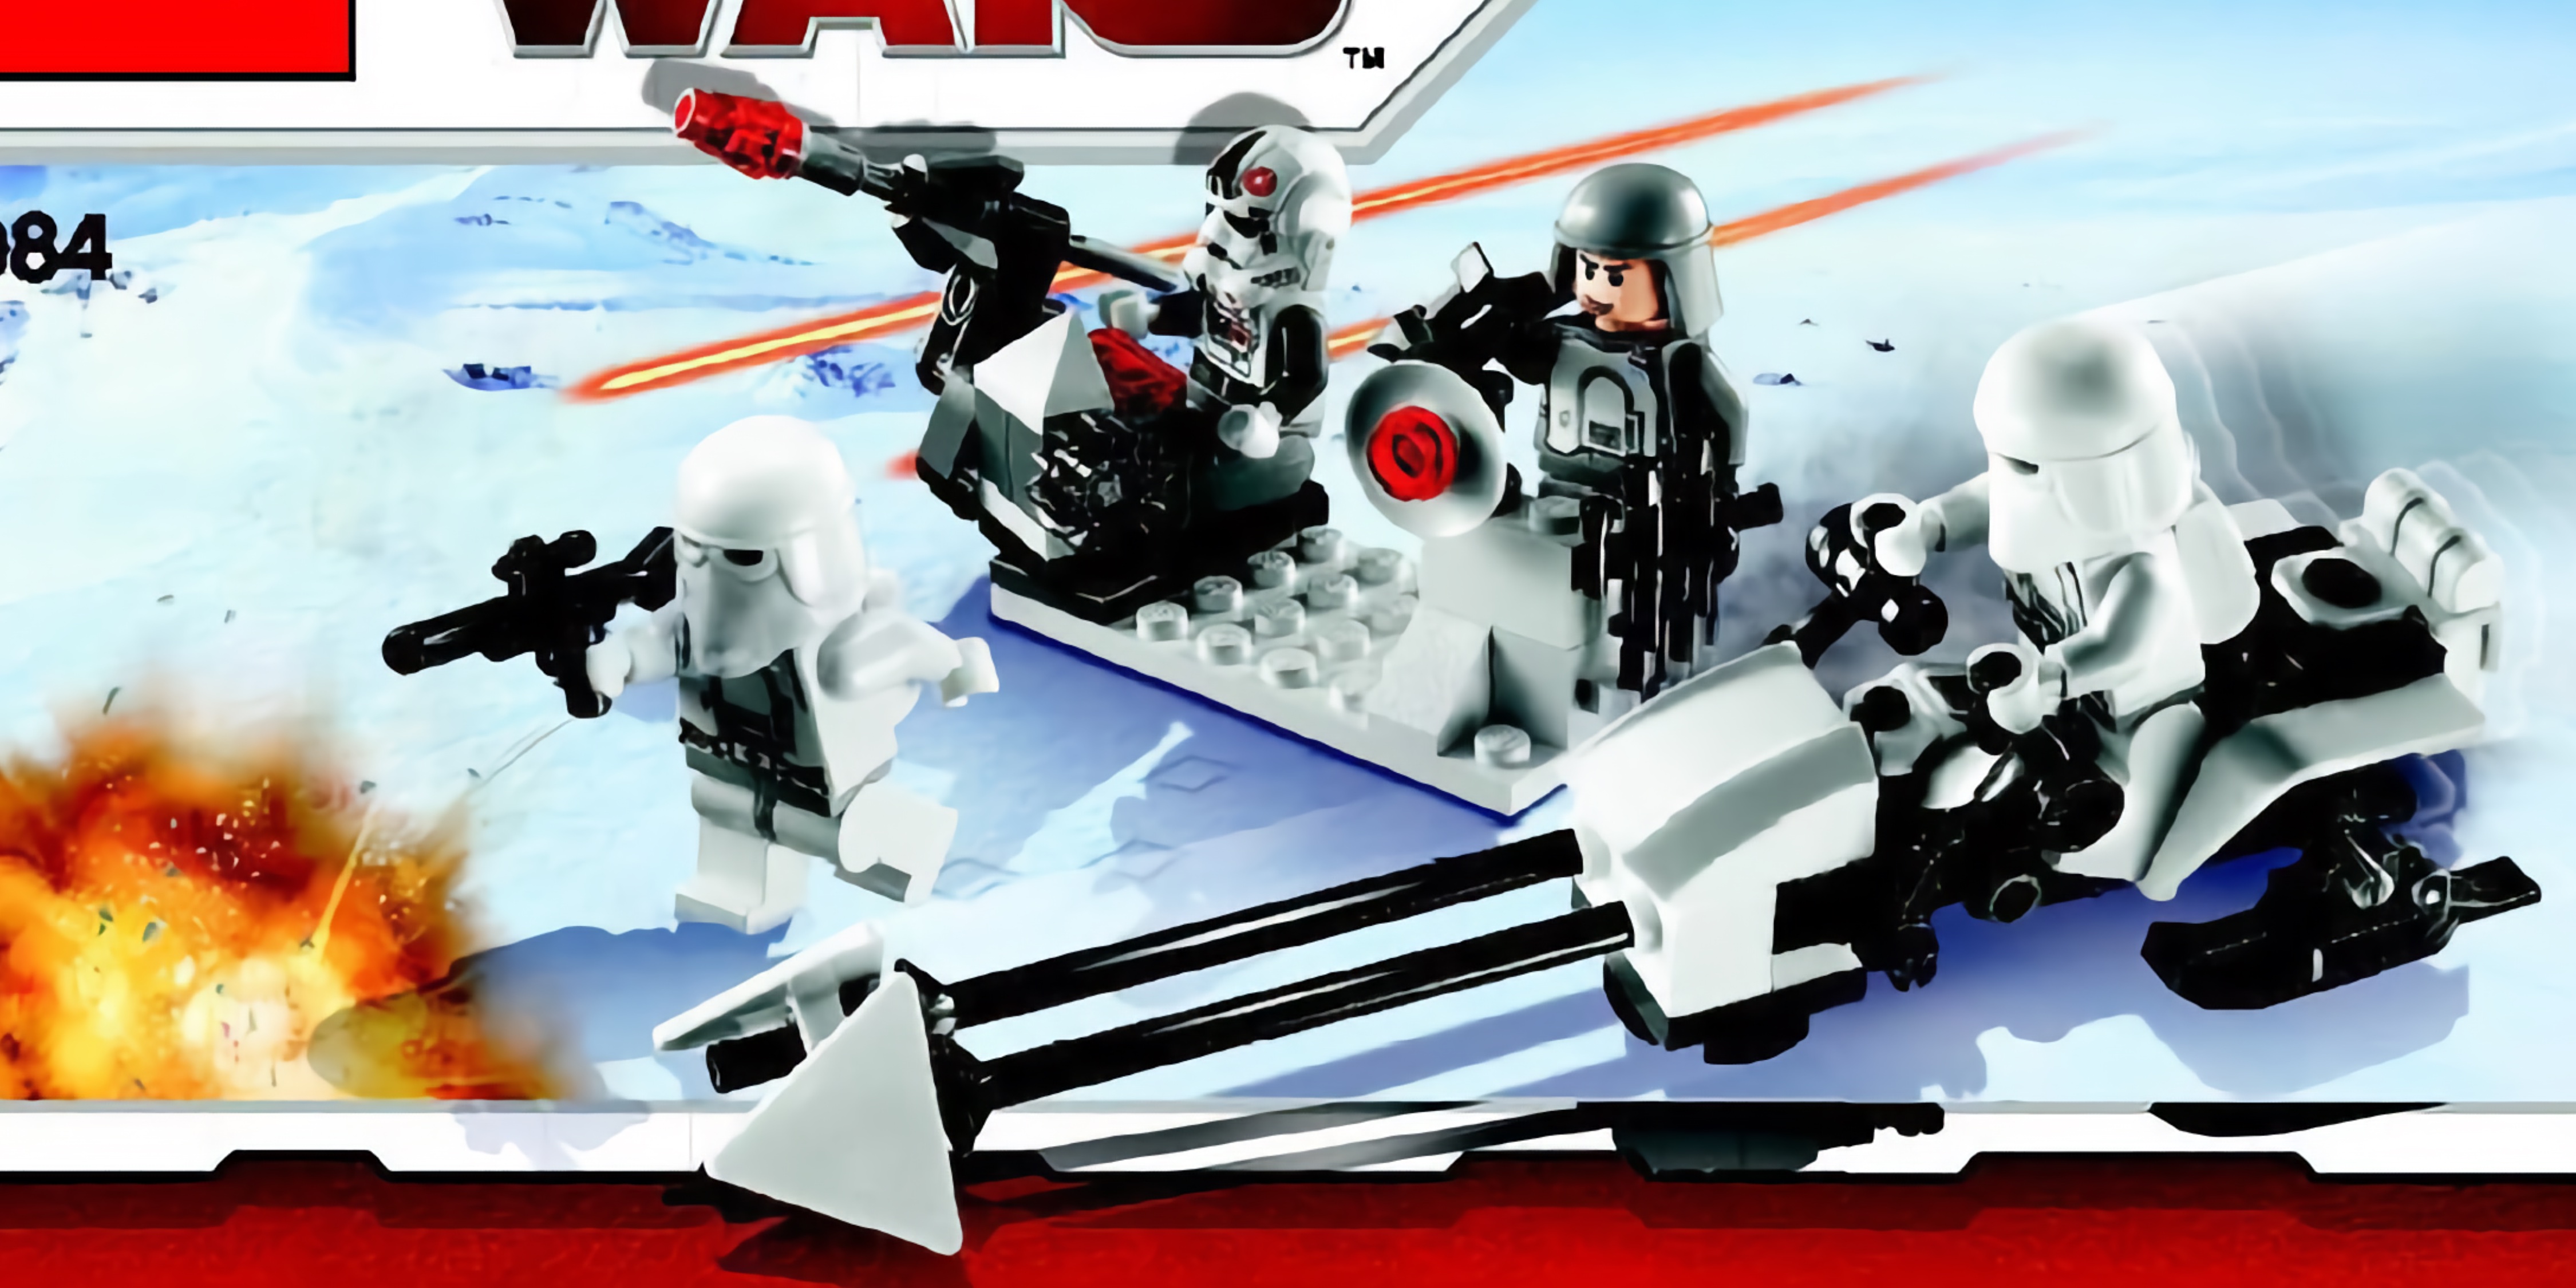 lego star wars battle packs